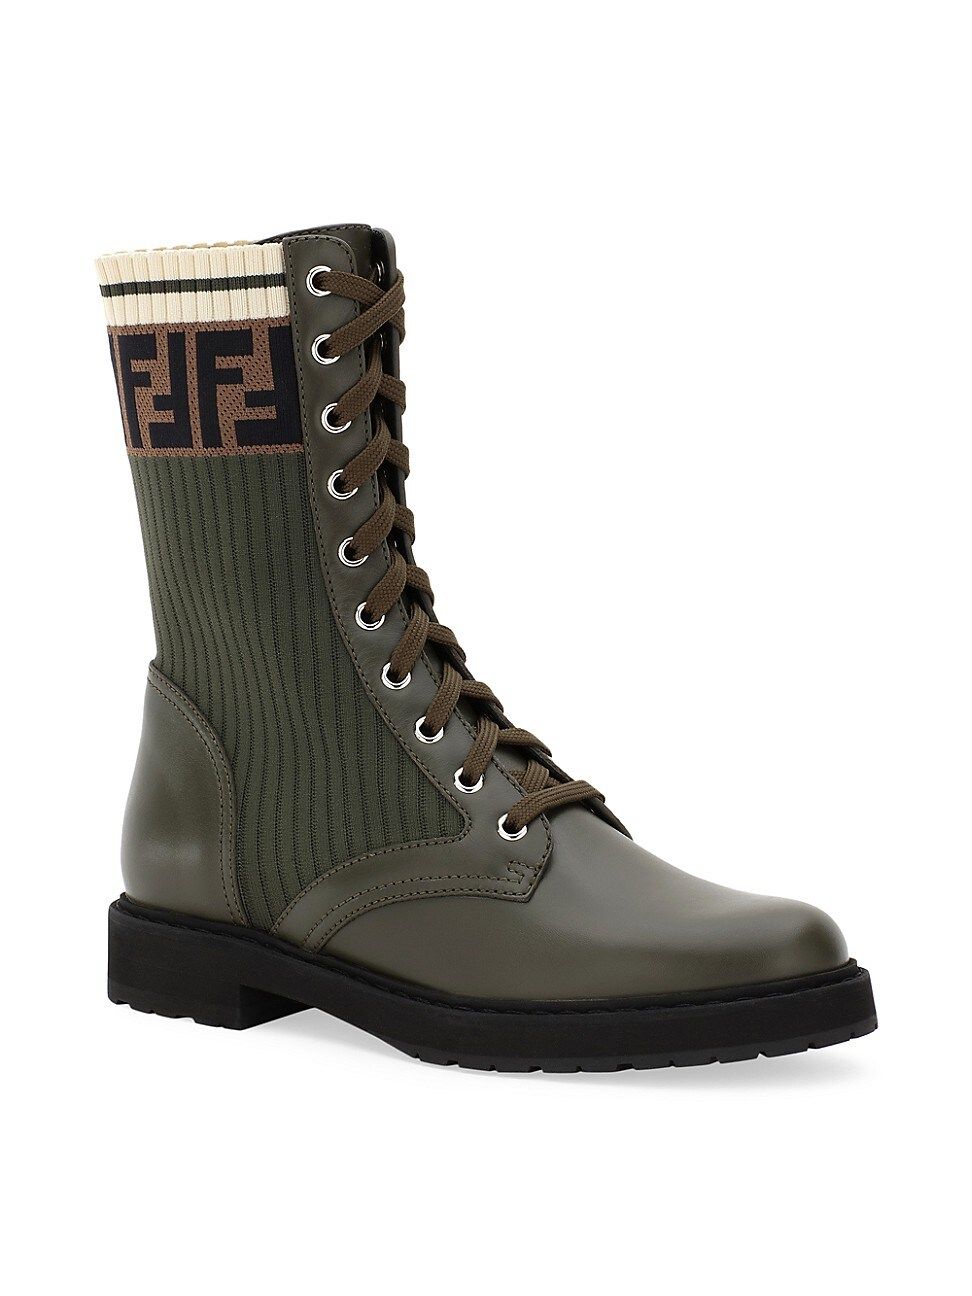 Fendi Women's Rockoko Knit Leather Combat Boots - Military Olive - Size 6 | Saks Fifth Avenue